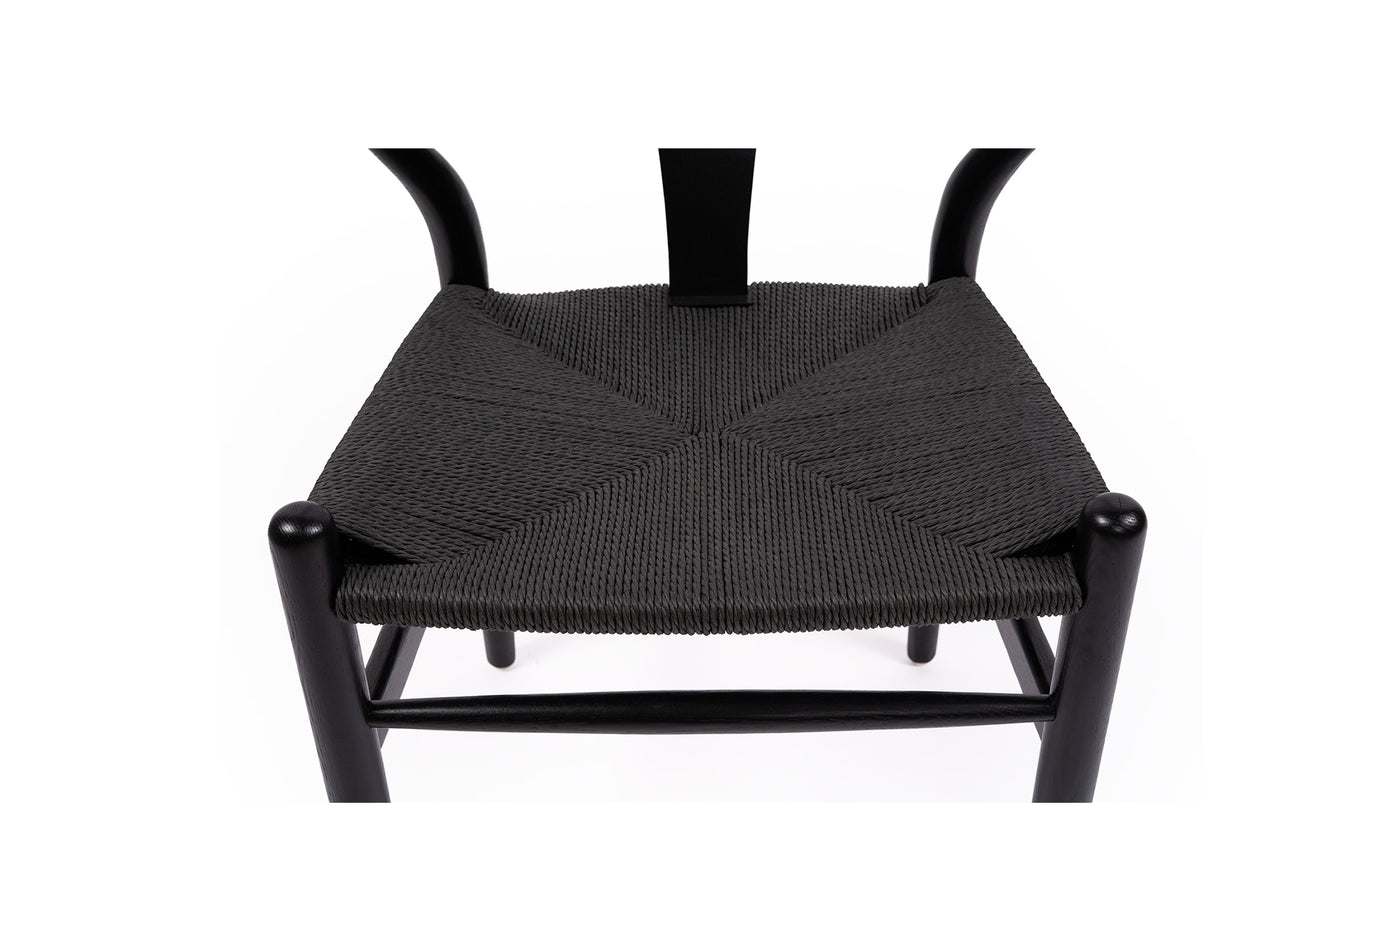 Cross Over Designer Replica Chair - Black on Black